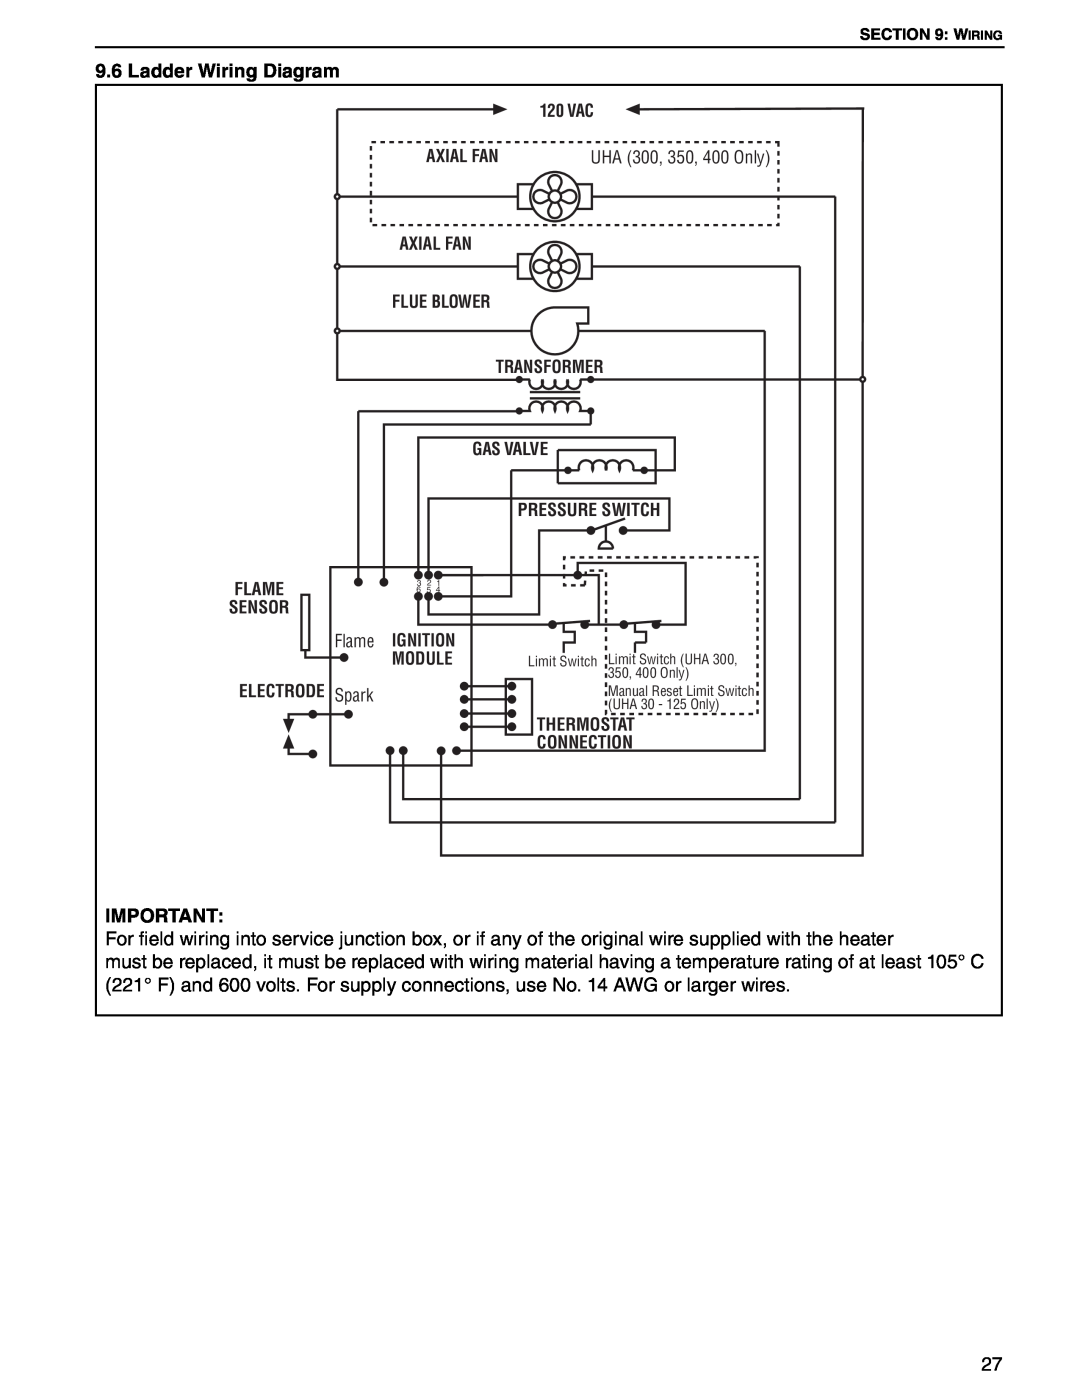 Roberts Gorden 45, 75, 100, 125, 30, 60 service manual Ladder Wiring Diagram 